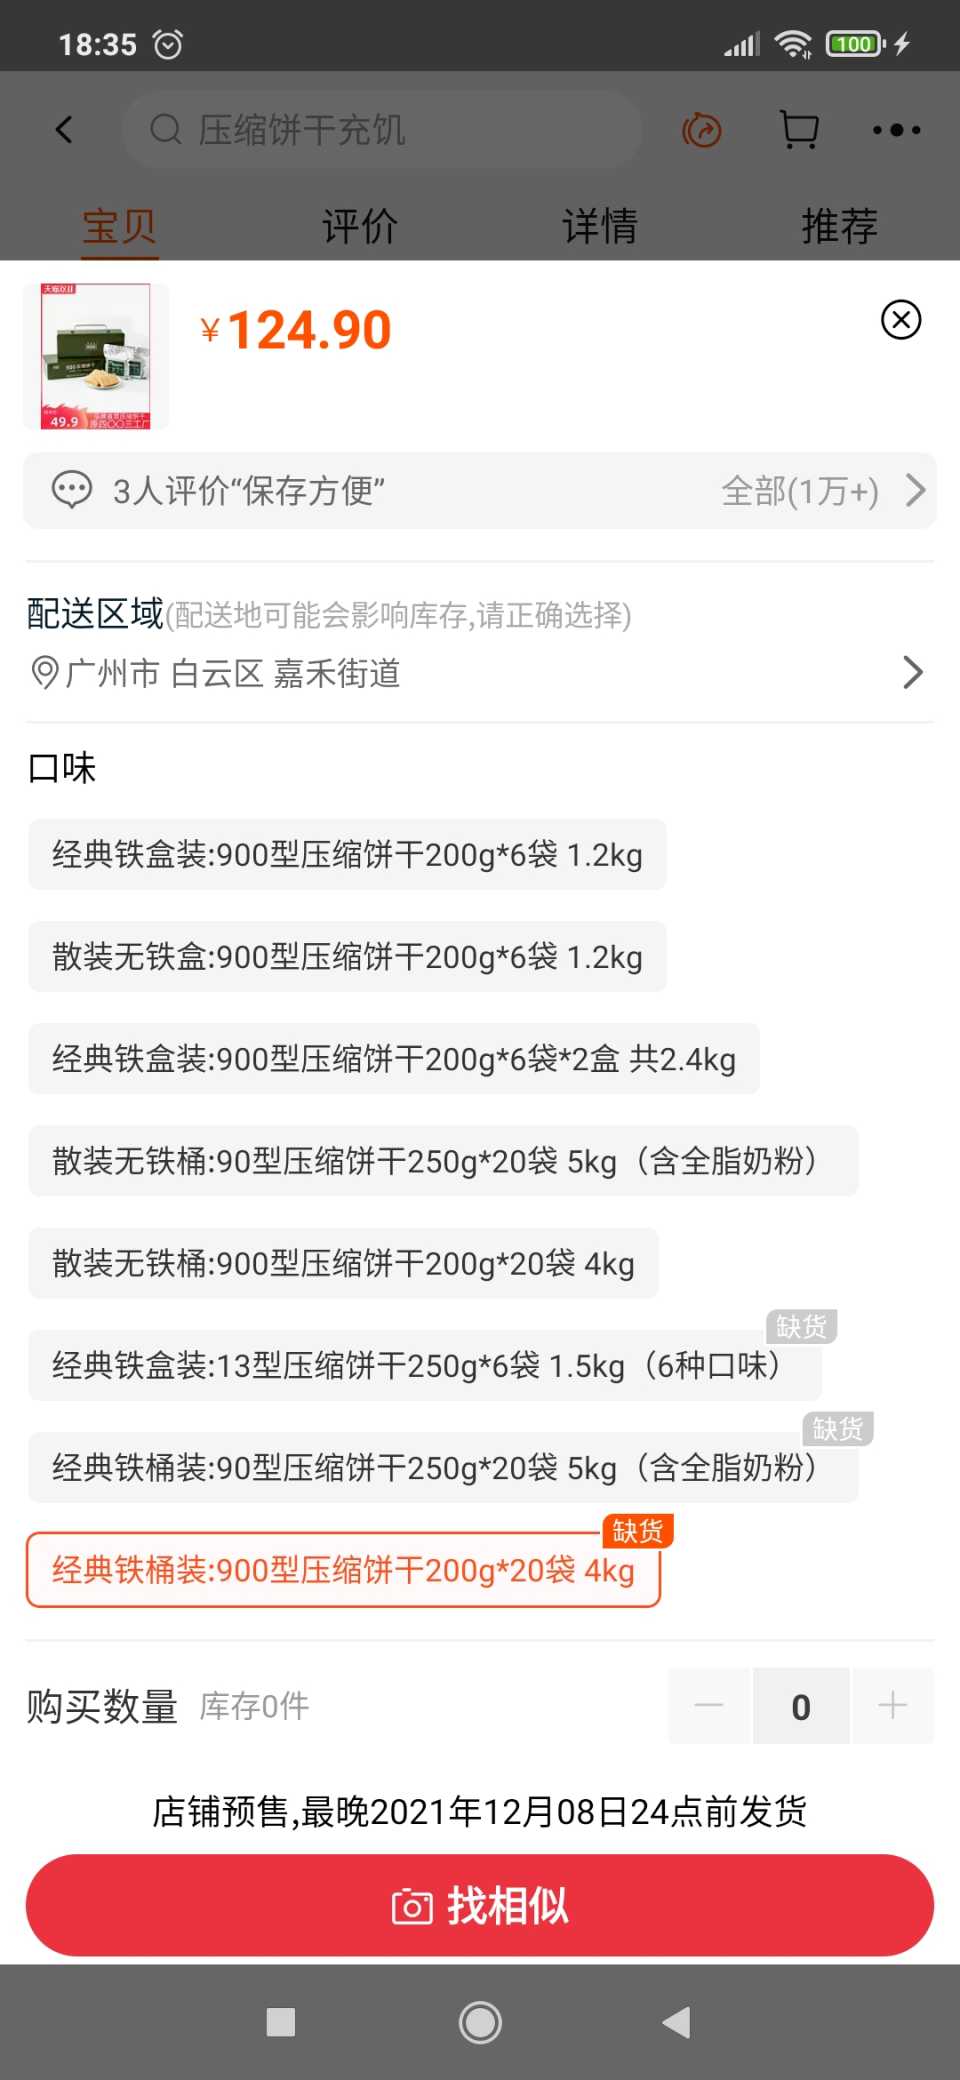 Screenshot_2021-11-09-18-35-29-477_com.taobao.taobao.jpg